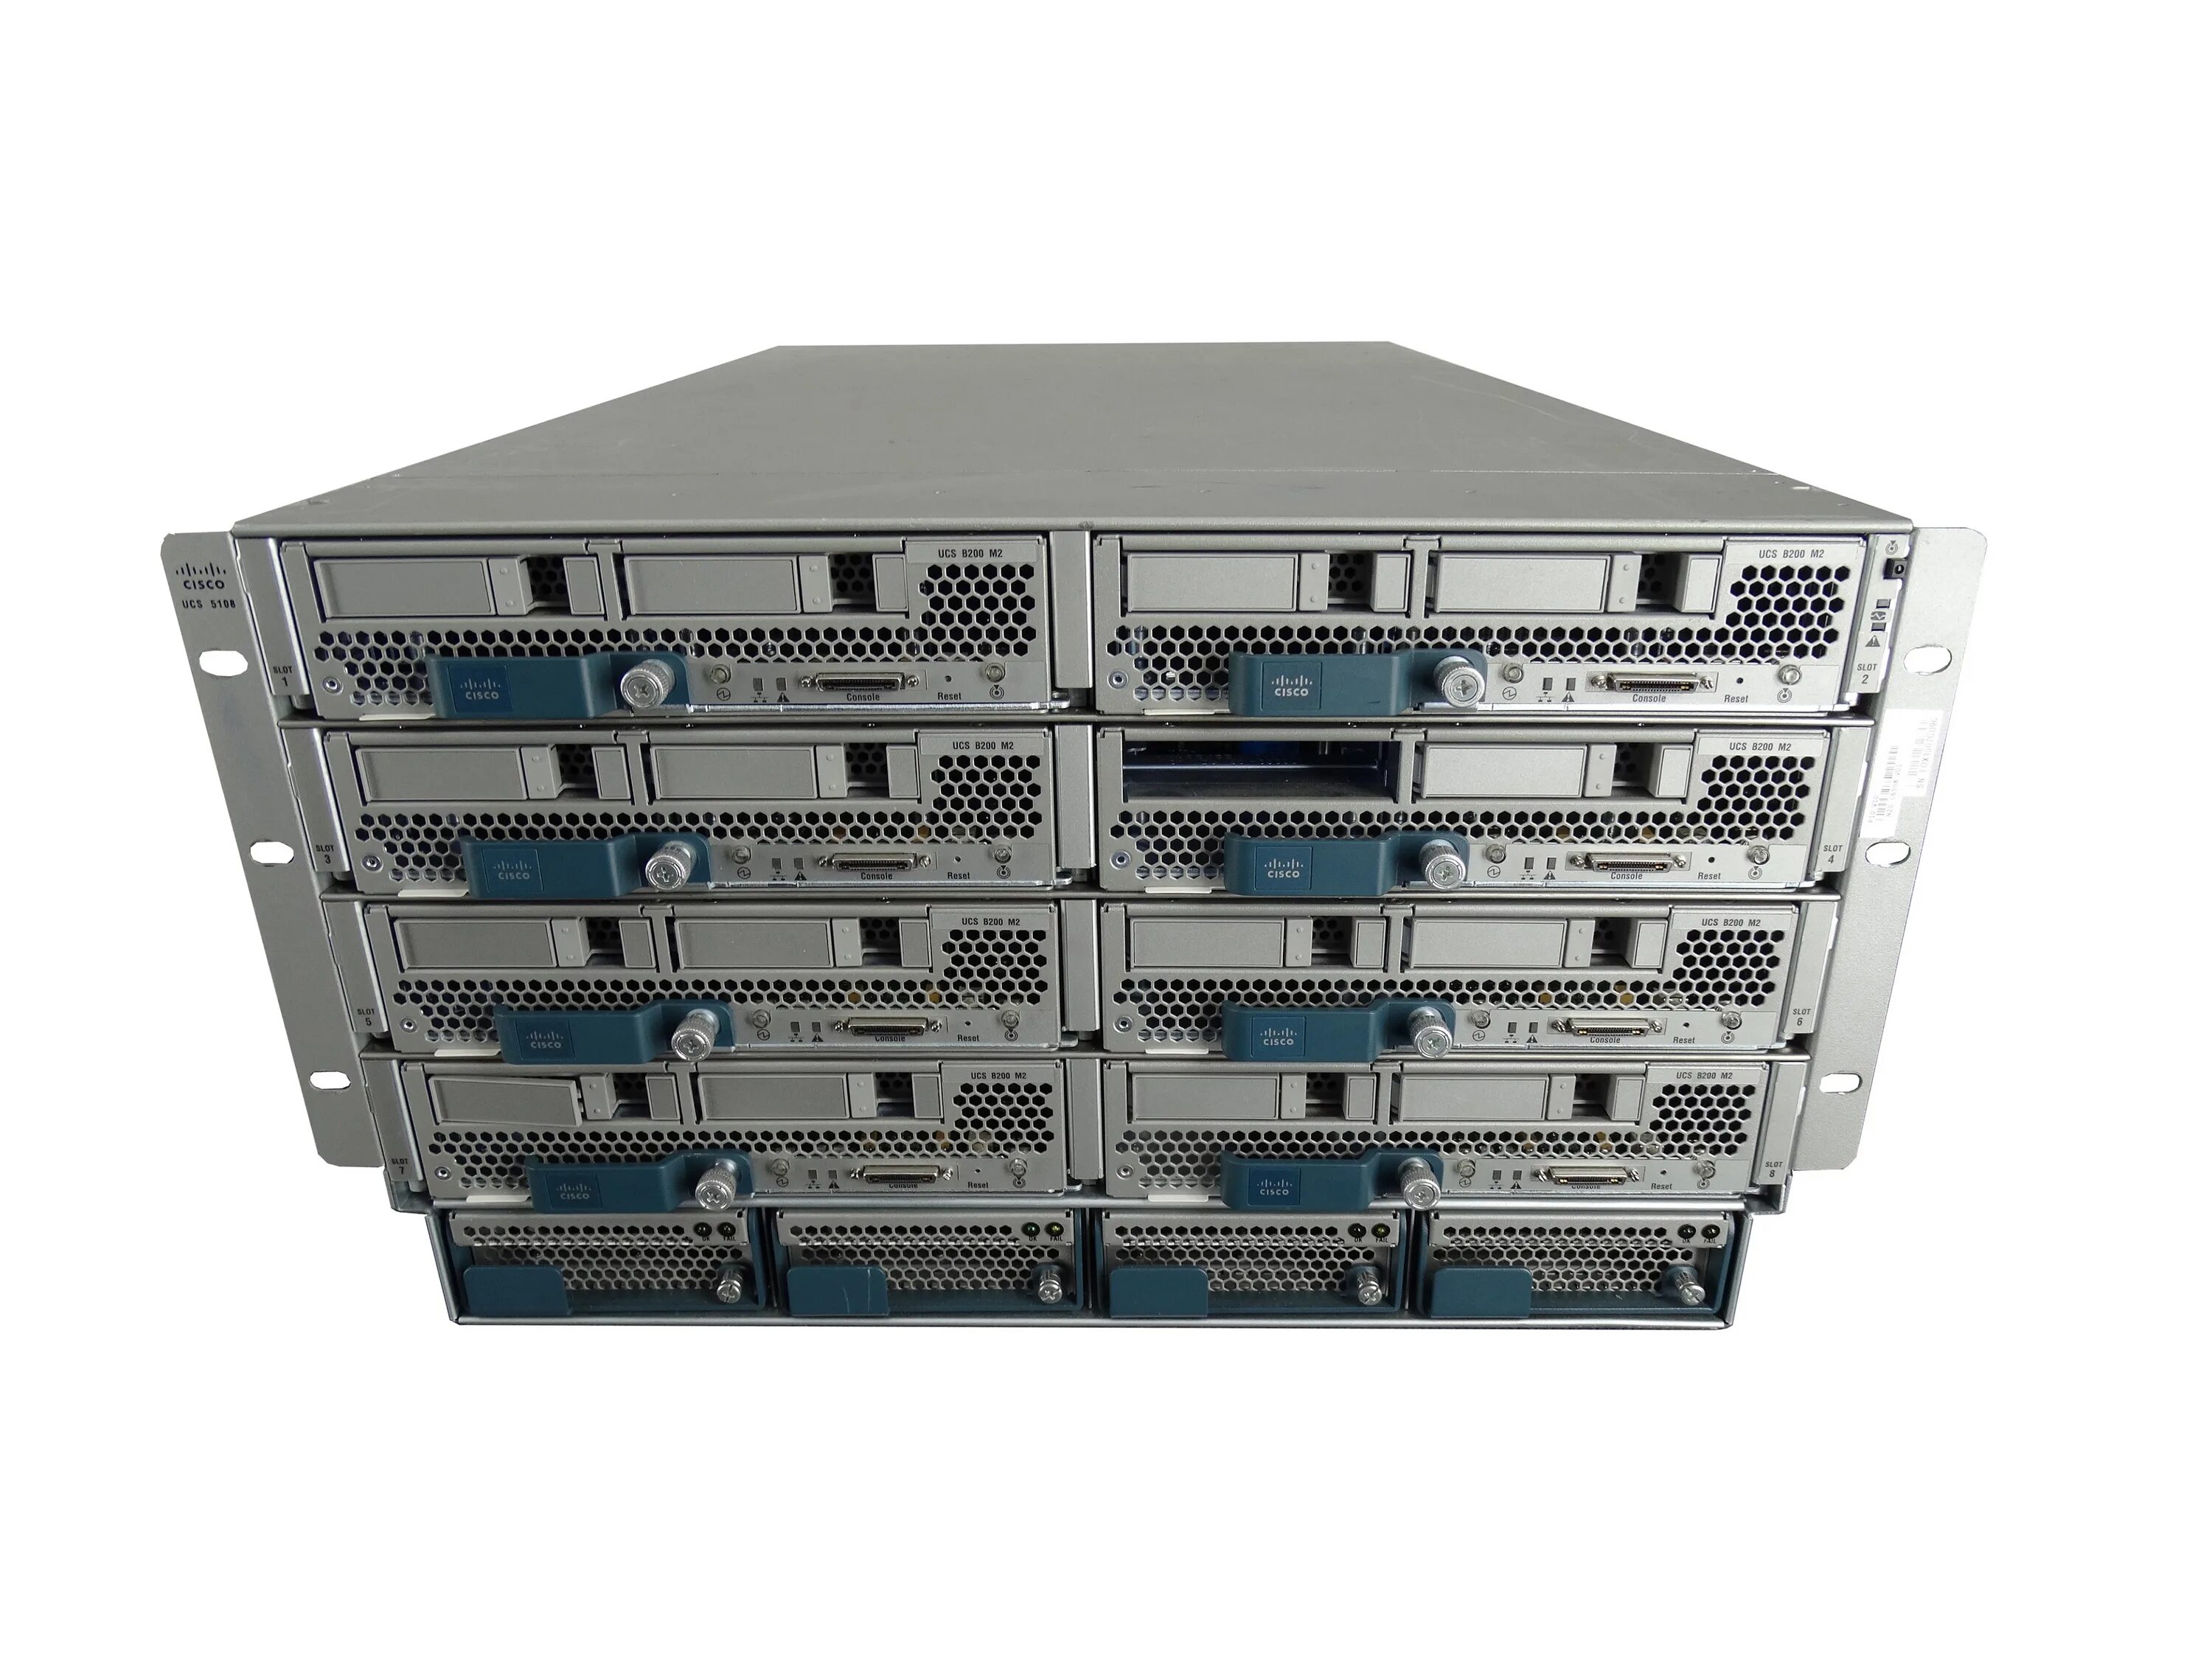 Cisco UCS b200 m3. Cisco UCS 5108 Chassis. Cisco UCS 5108. Cisco UCS b200 m2. Per server